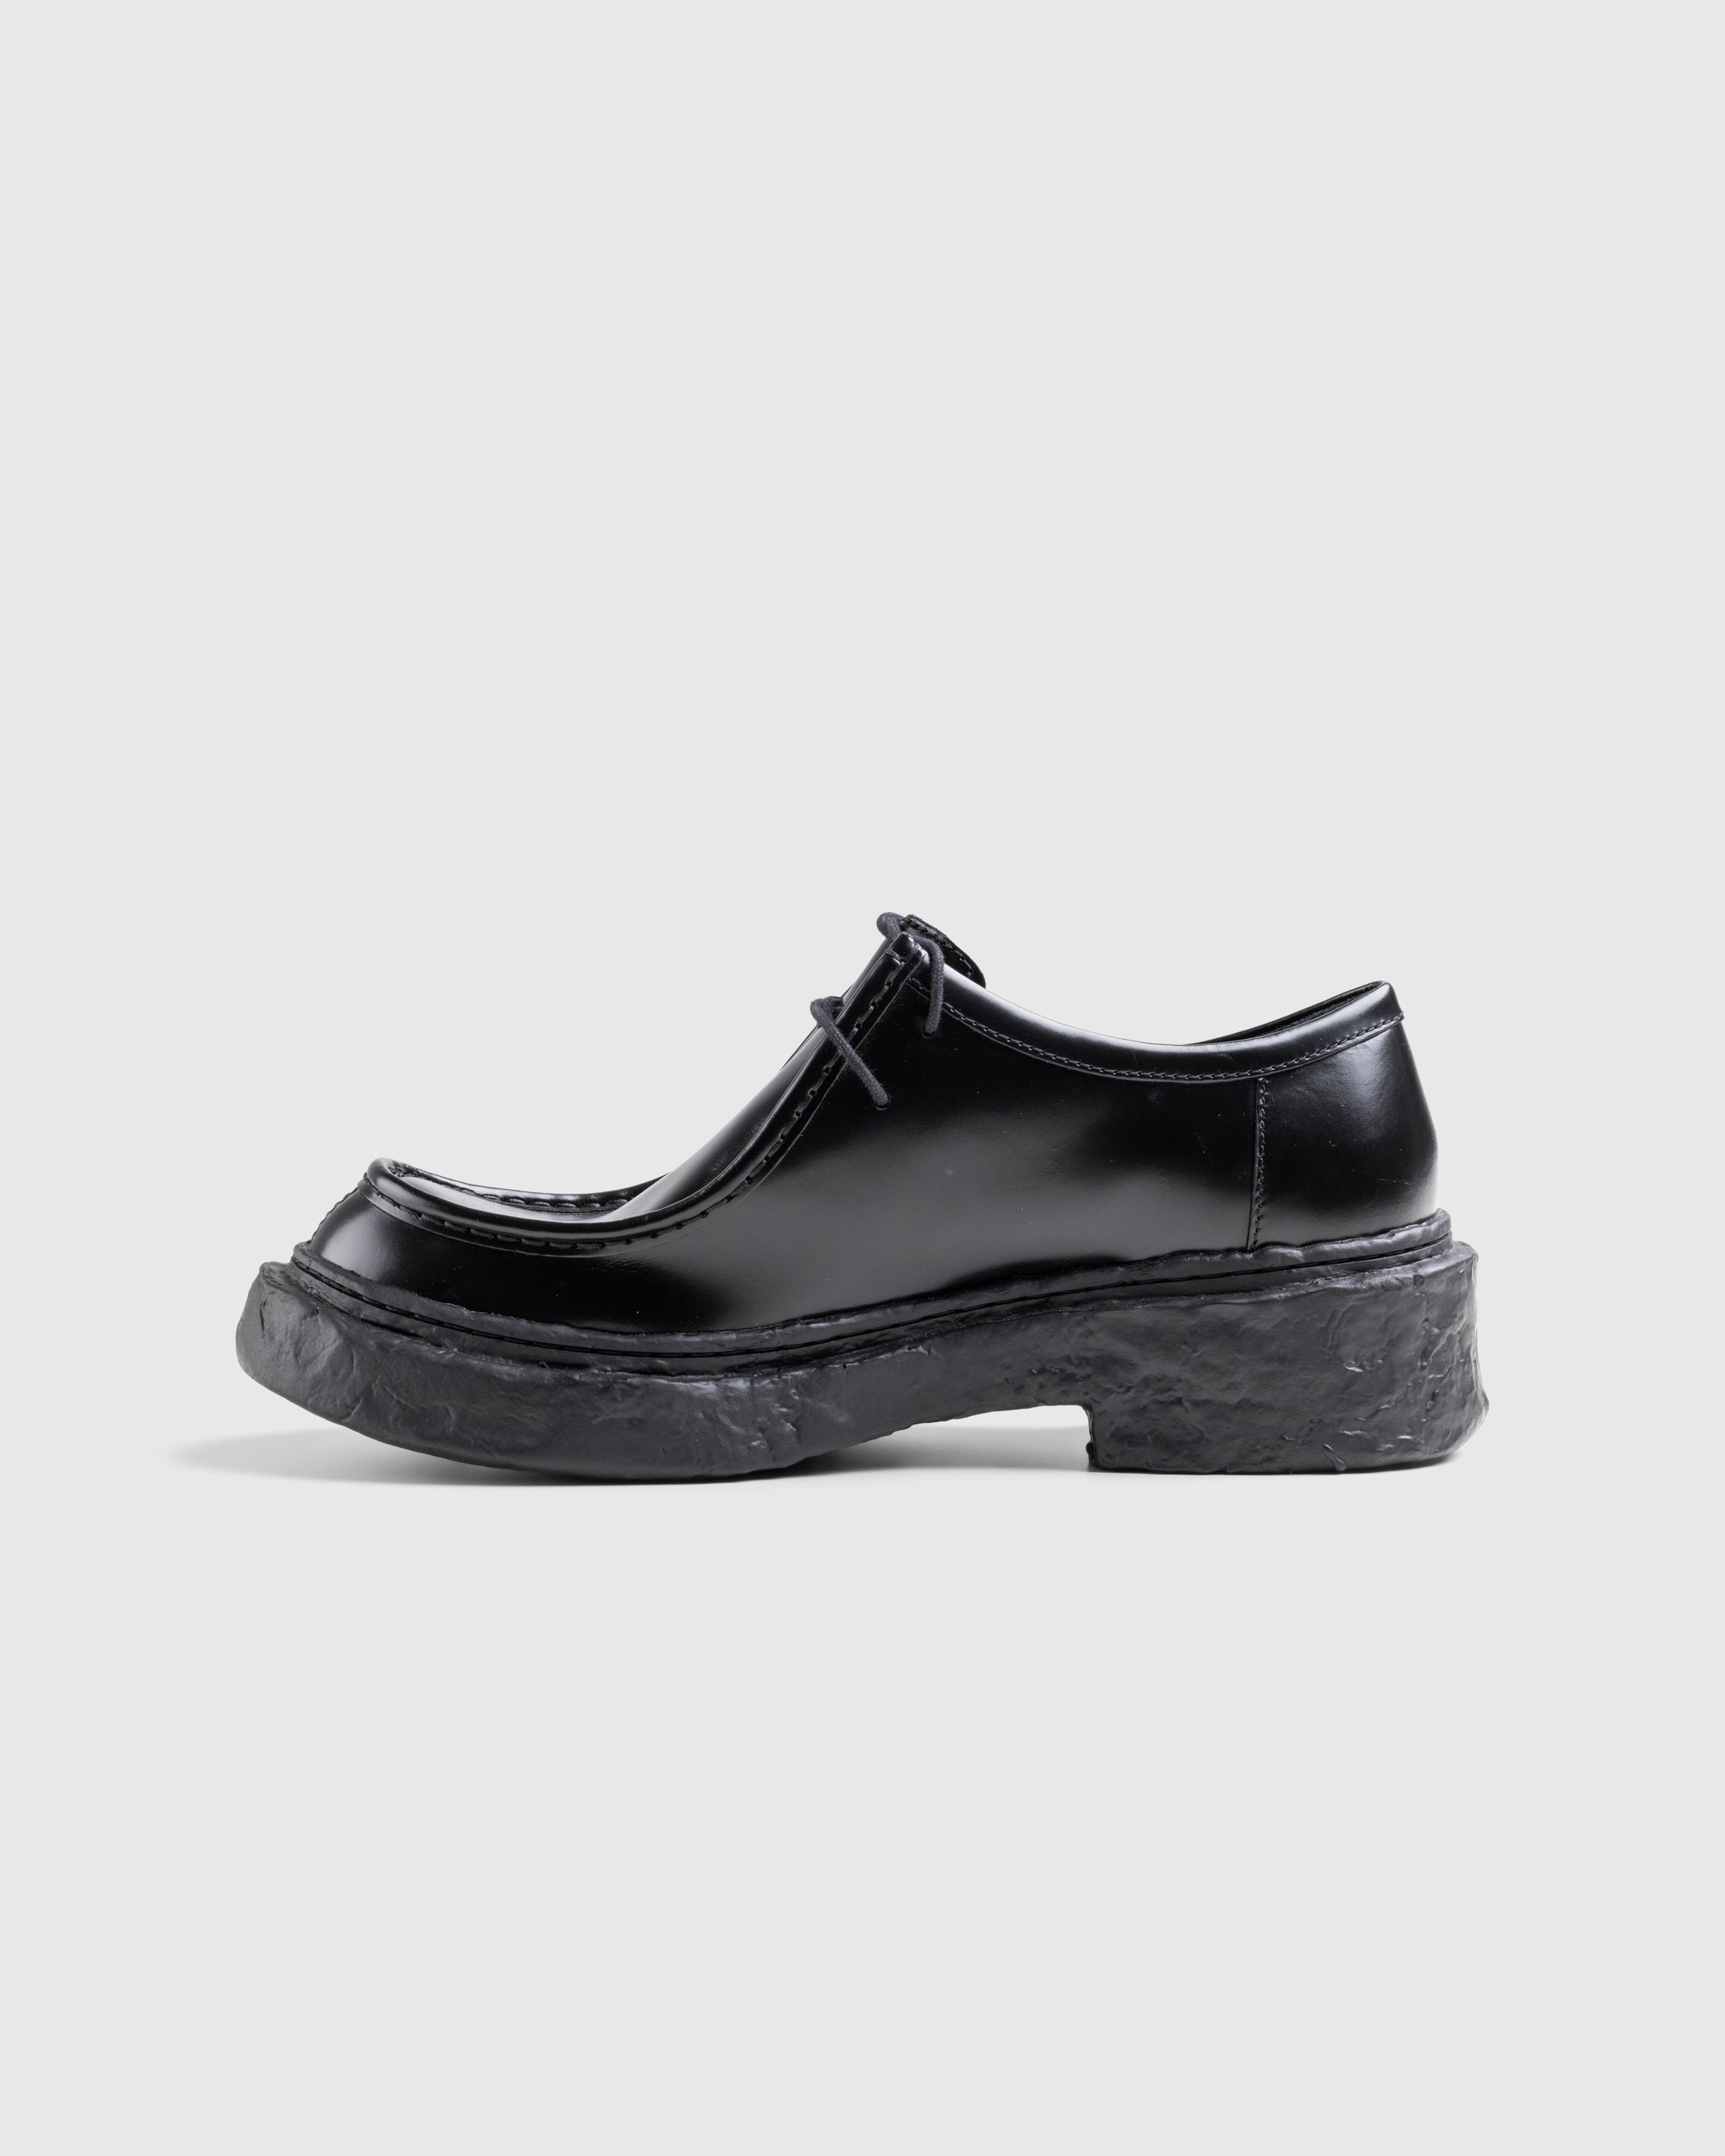 CAMPERLAB - Vamonos - Footwear - Black - Image 2